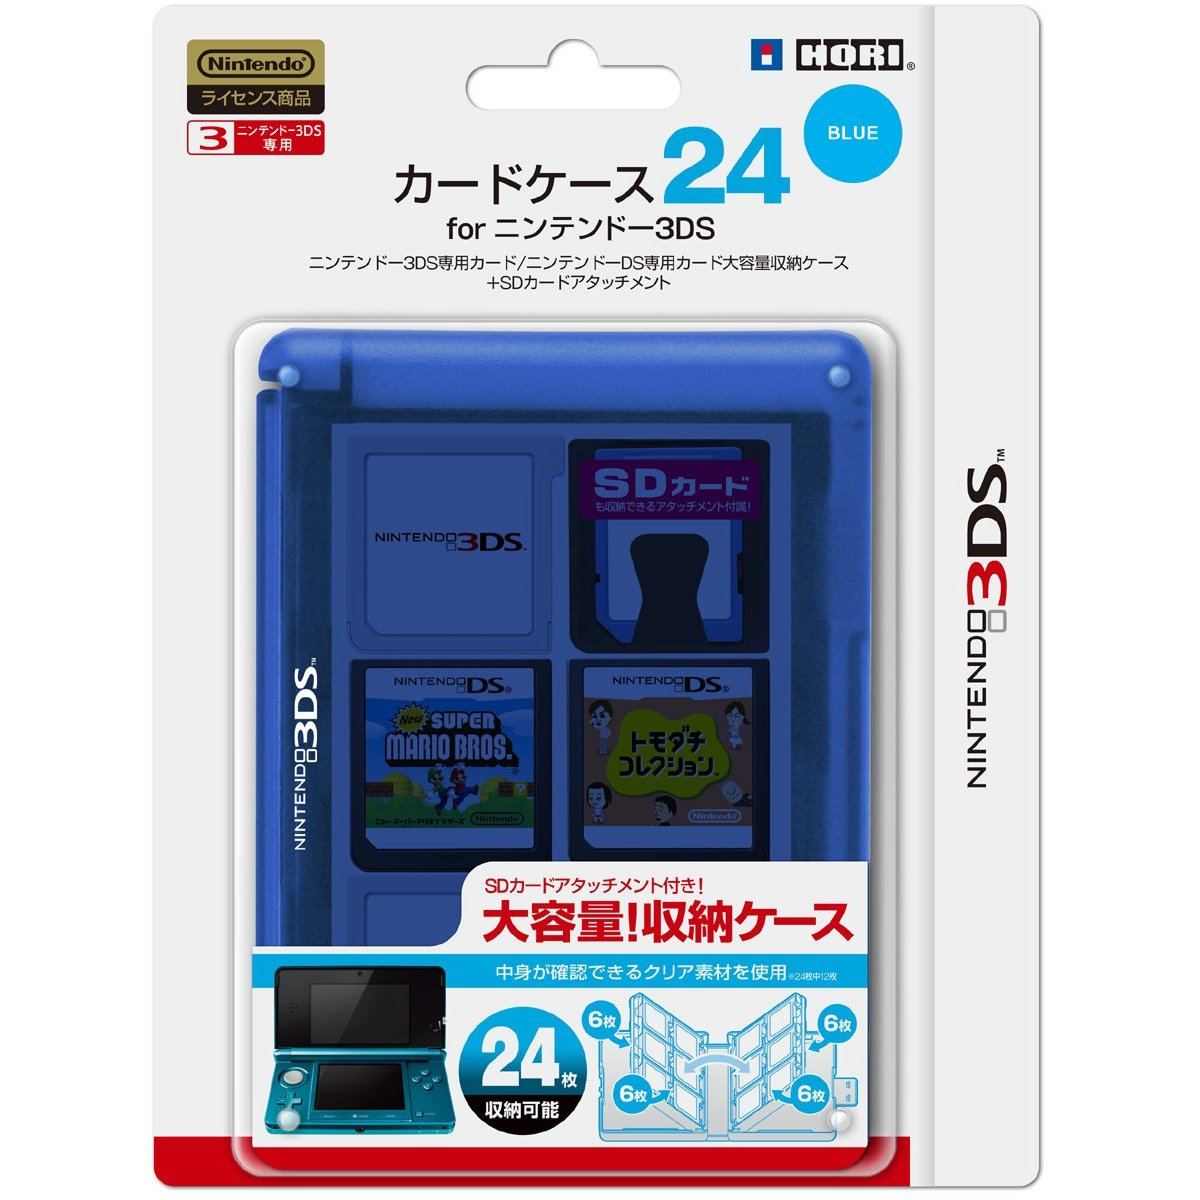 3DS Card Case 24 (Blue) for Nintendo 3DS - Bitcoin & Lightning 